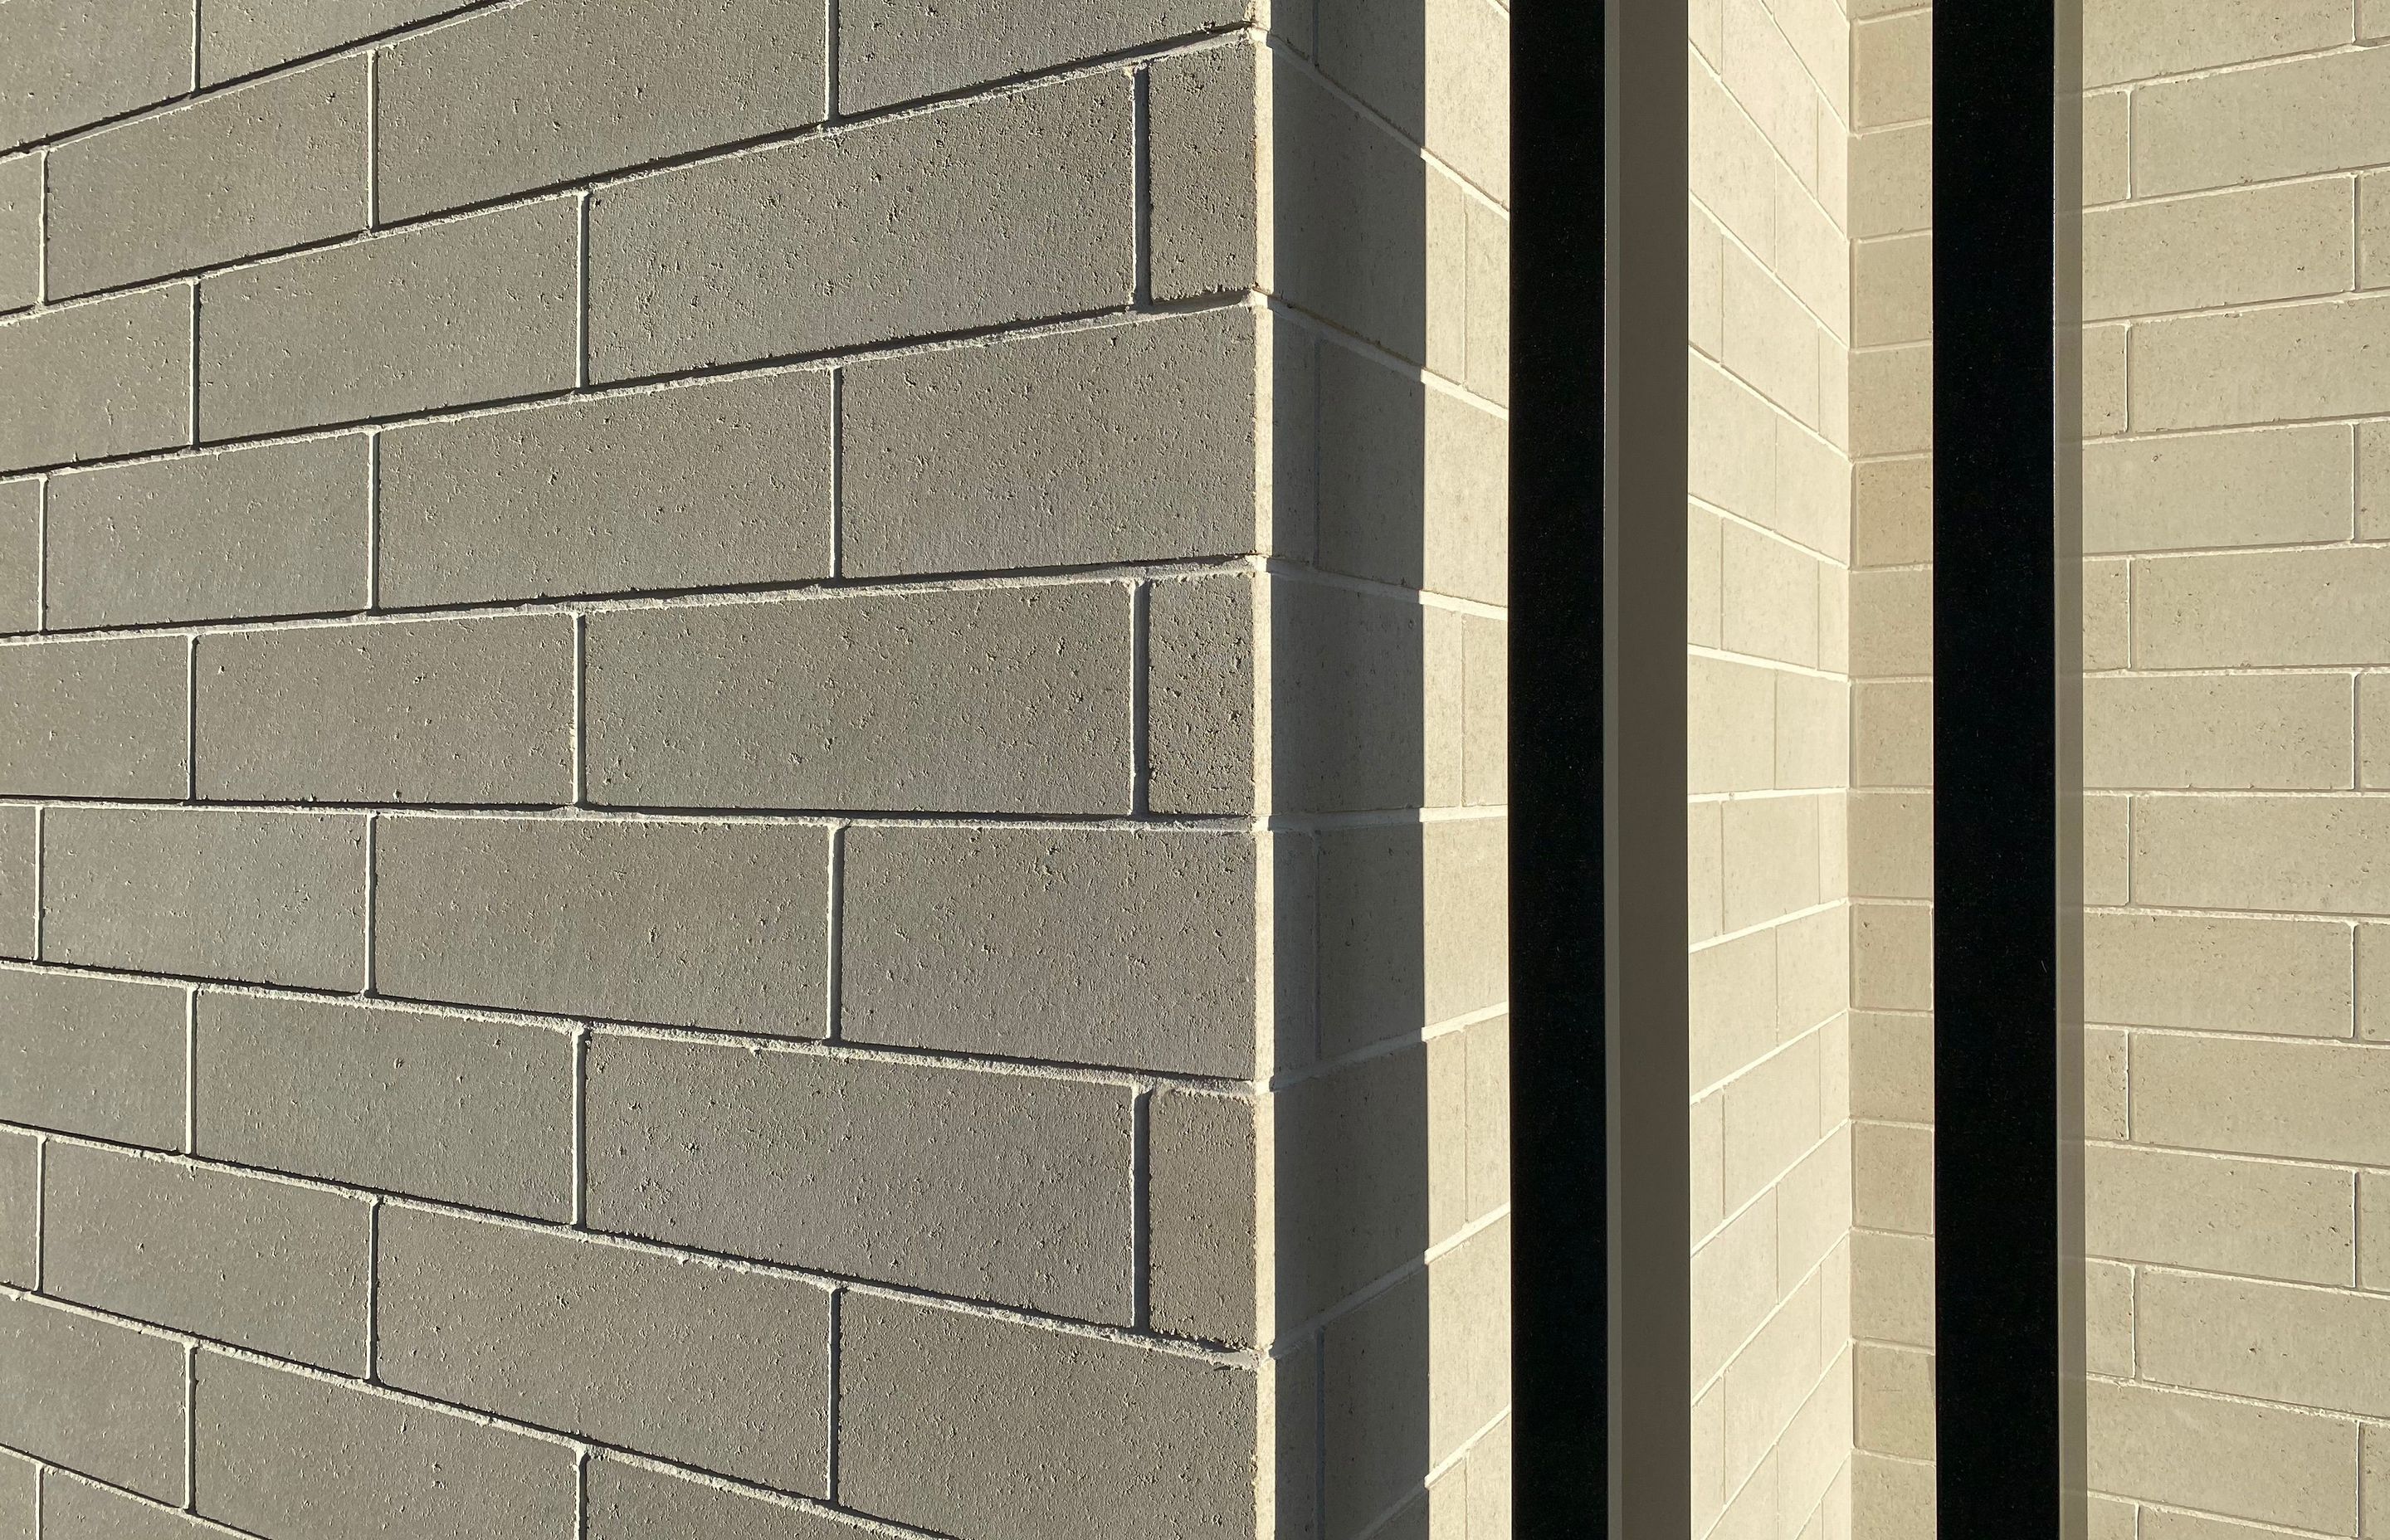 Brick masonry offers several benefits as a cladding.